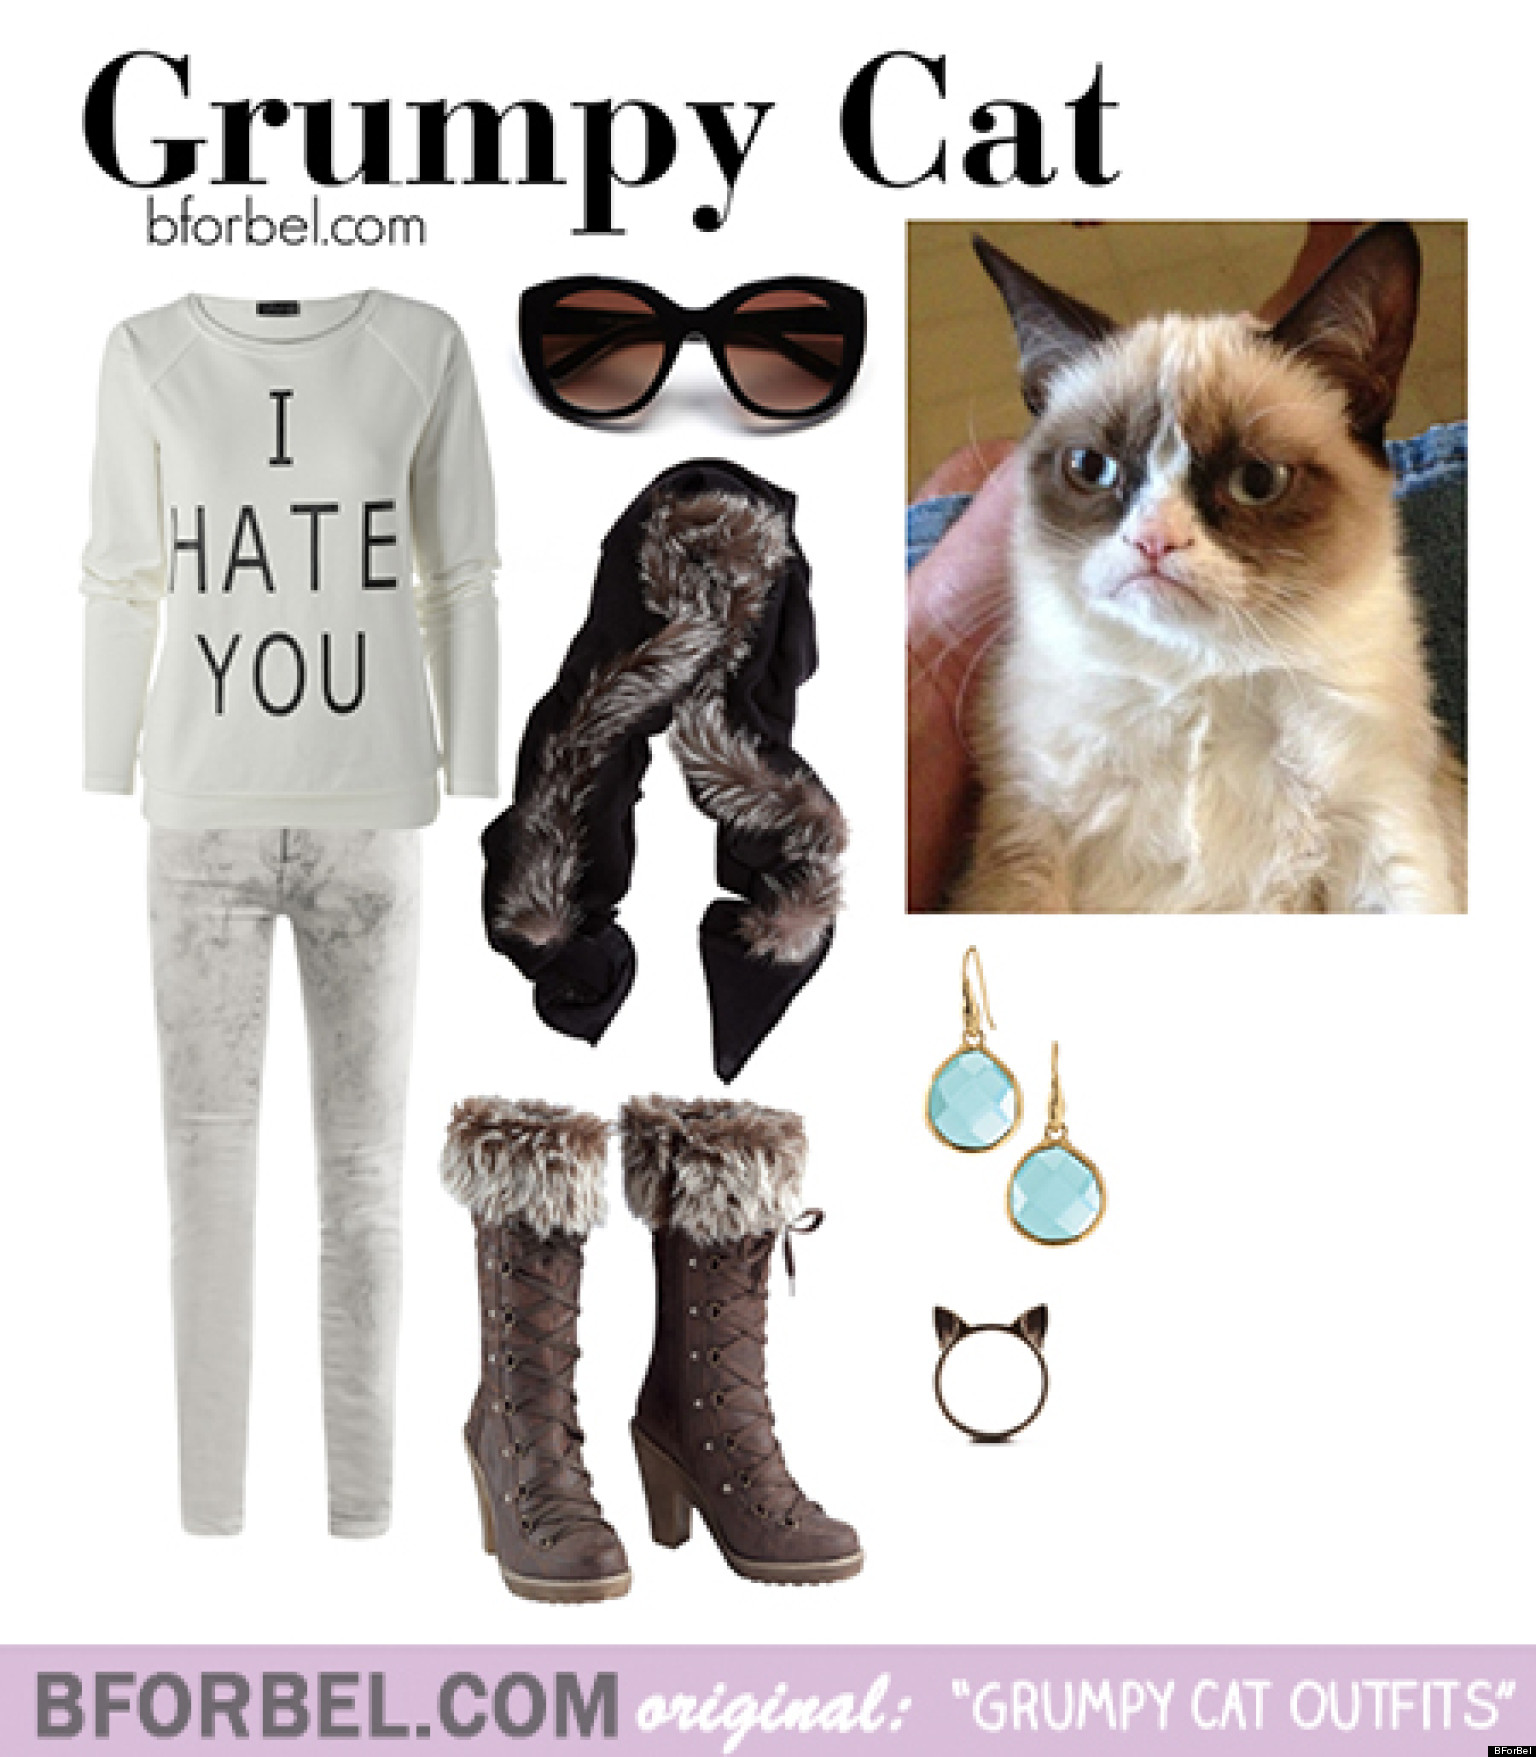 grumpycat